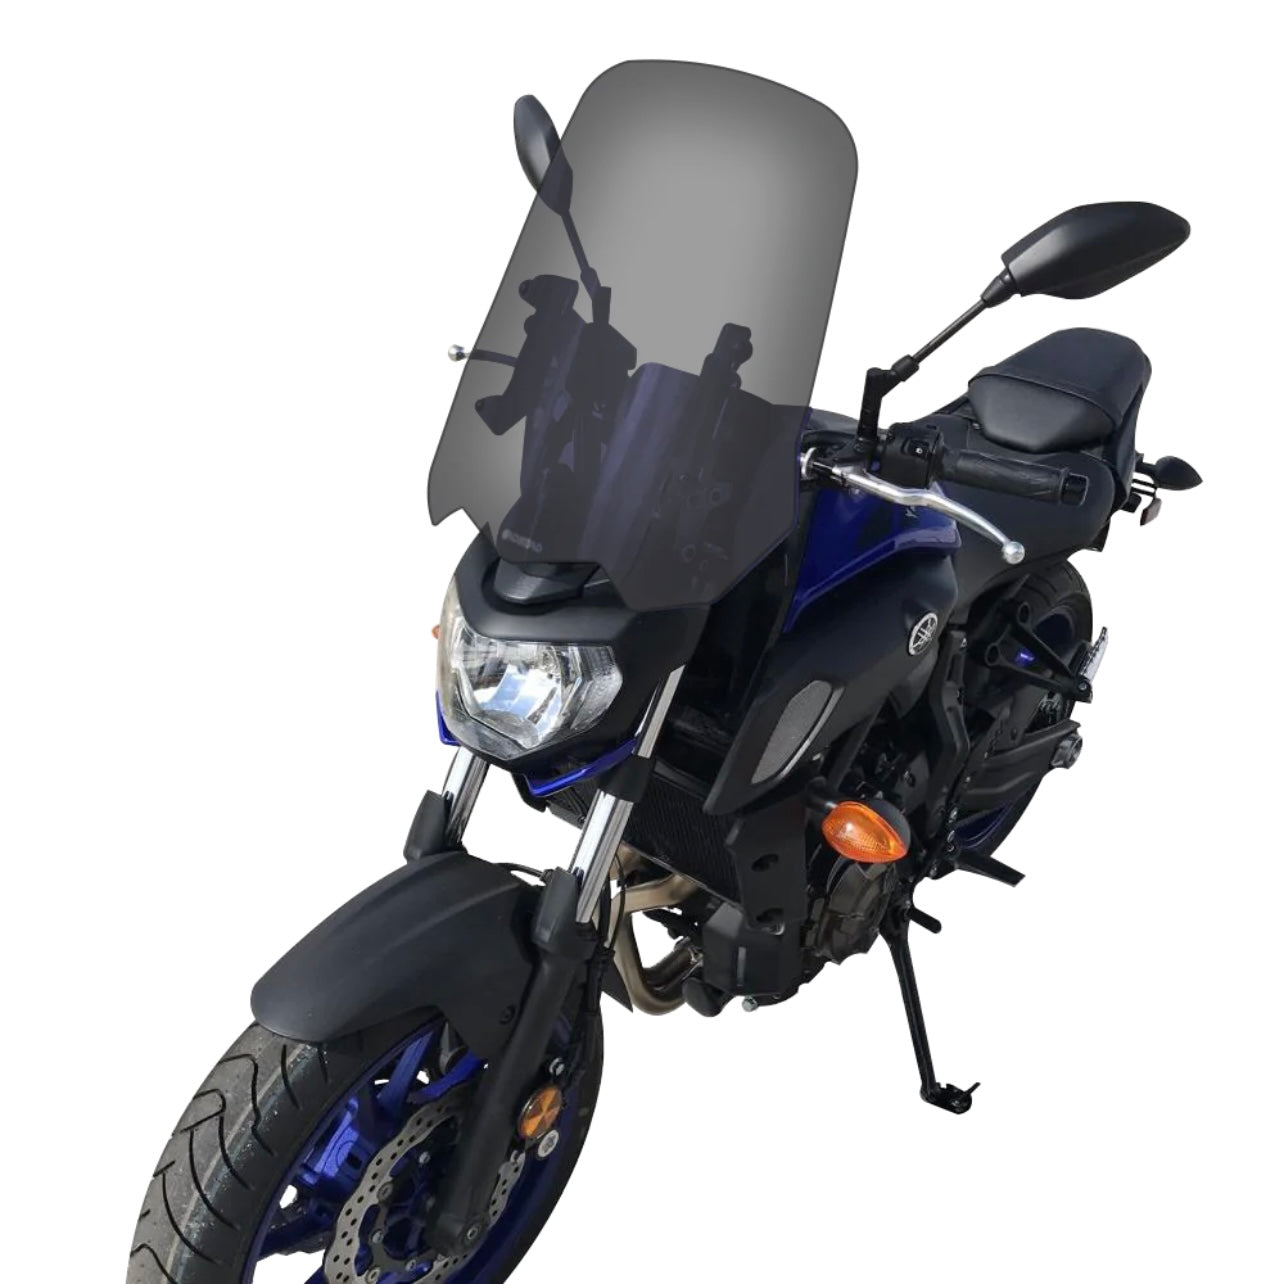 Adjustable Windshield System for Yamaha FZ-07 / MT-07 (2018-2020)